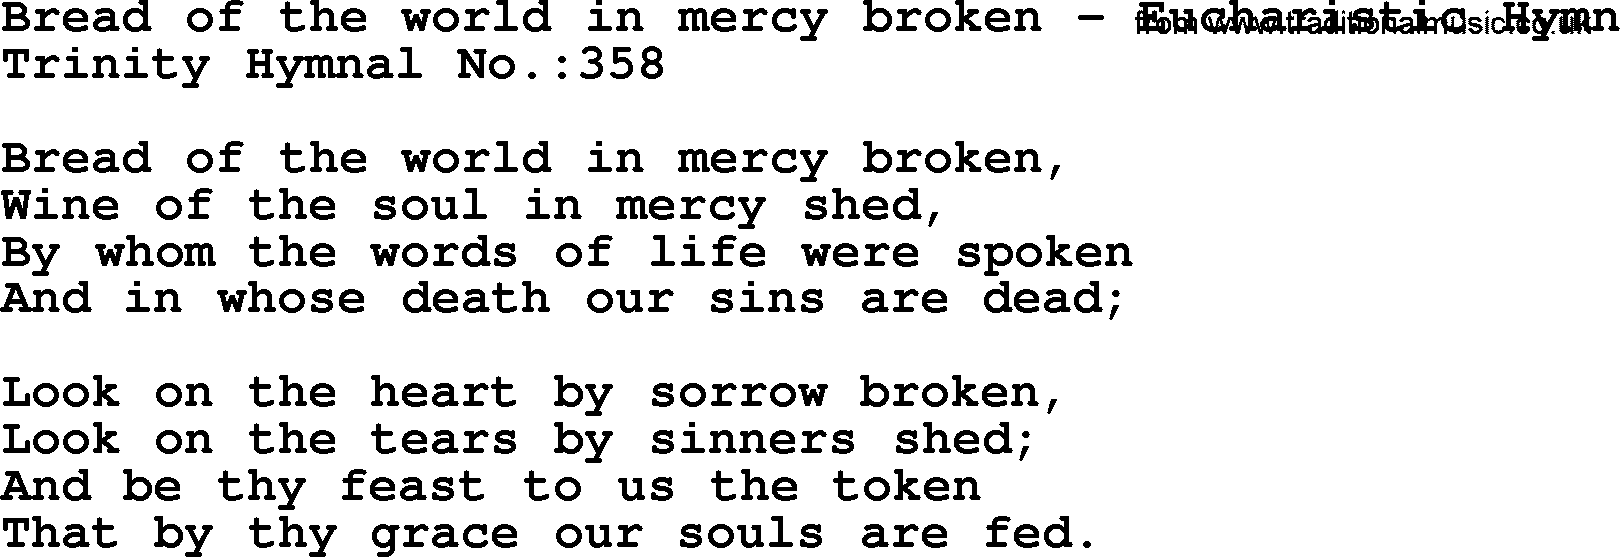 Trinity Hymnal Hymn: Bread Of The World In Mercy Broken--Eucharistic Hymn, lyrics with midi music